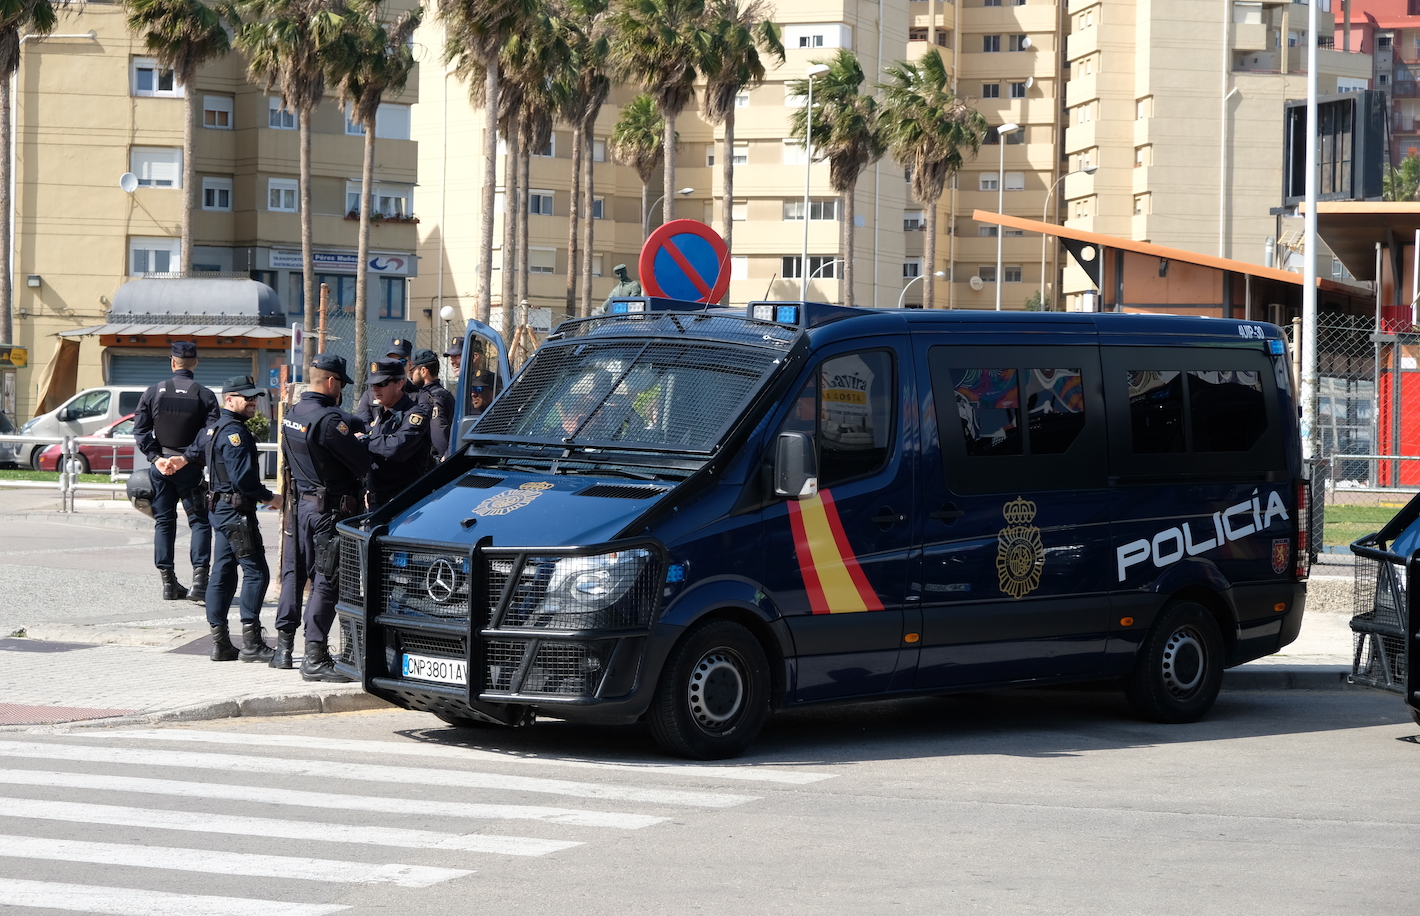 Spanish-police-accuse-illegal-drug-vendor-of-laundering-$3.3m-haul-in-crypto